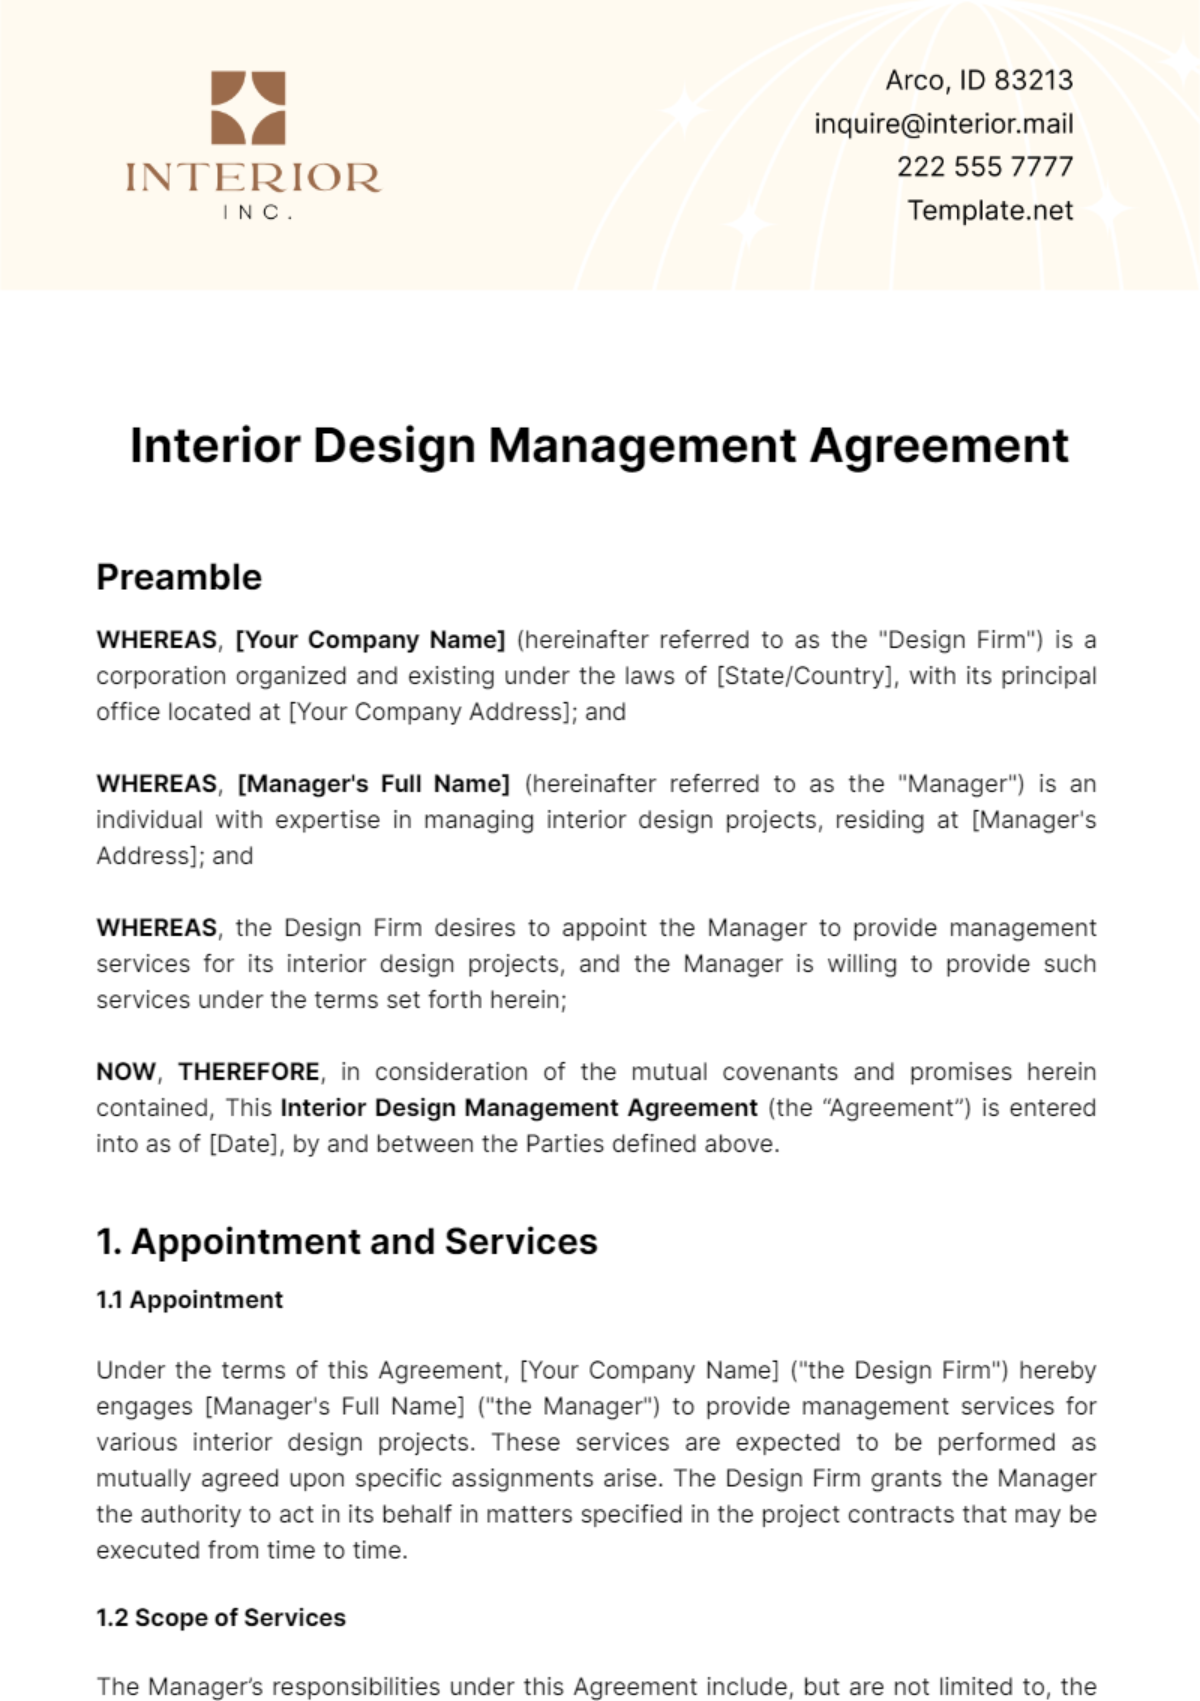 Interior Design Management Agreement Template